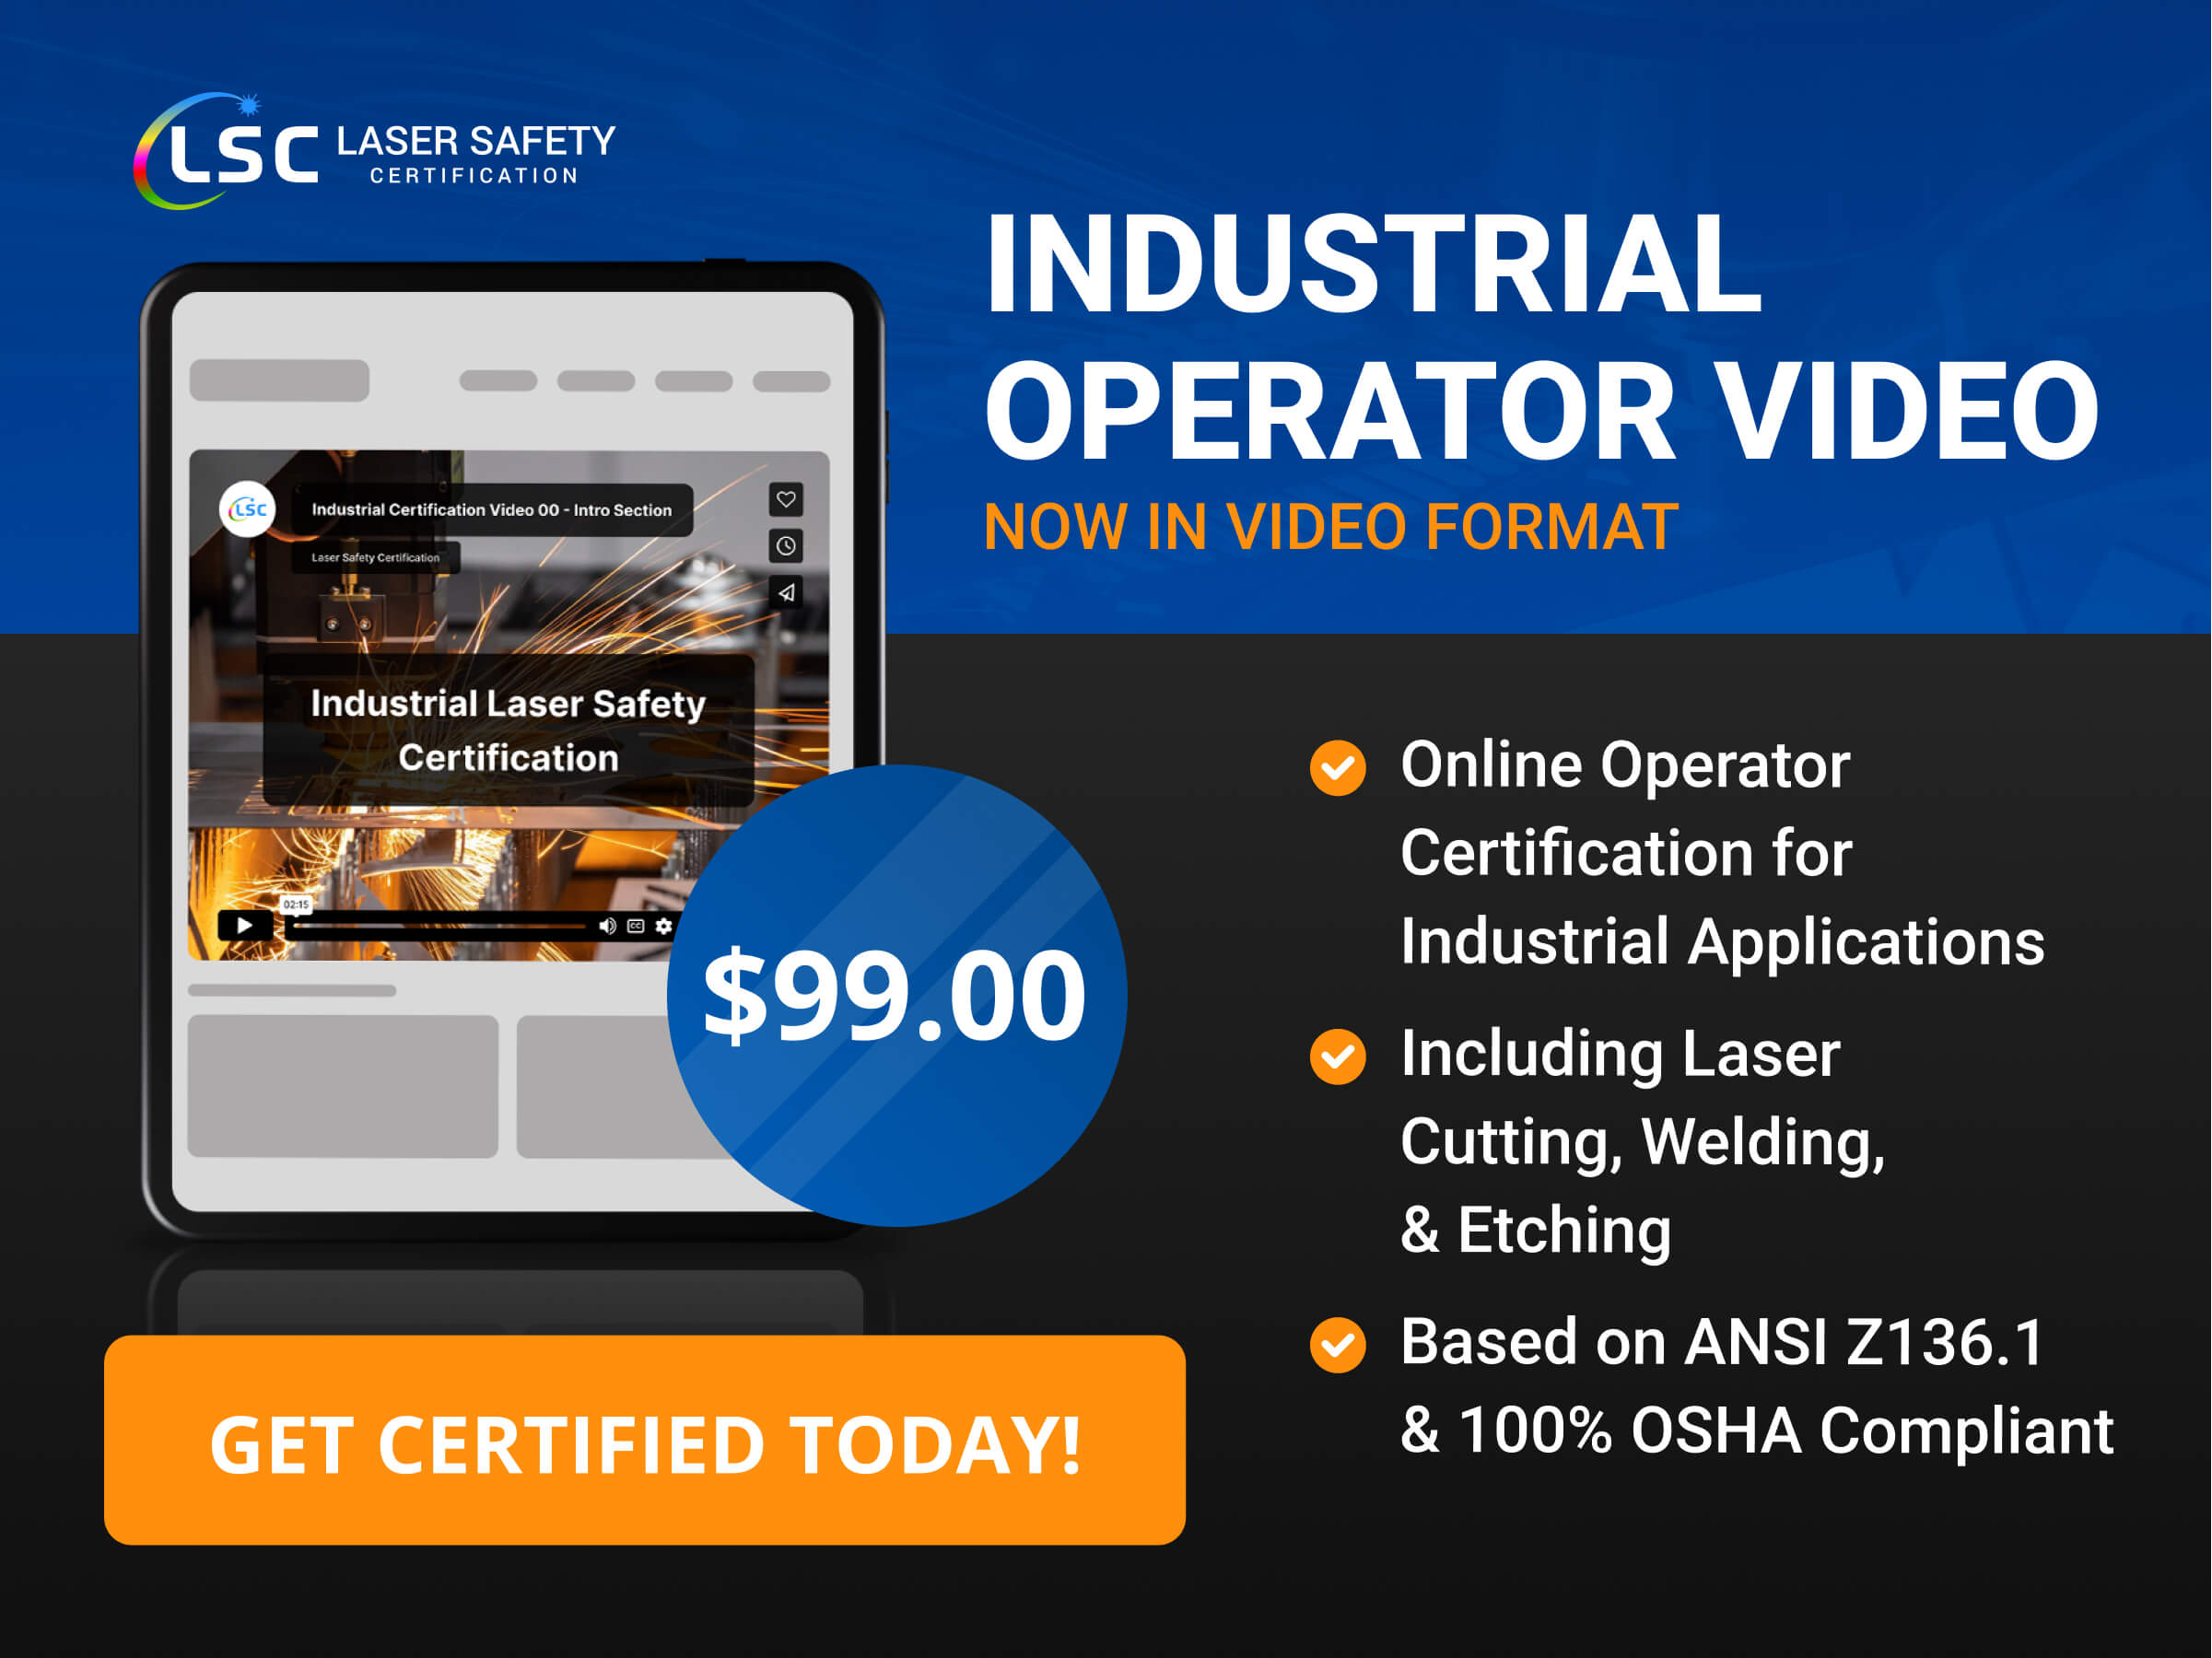 Industrial operator video now in video format.